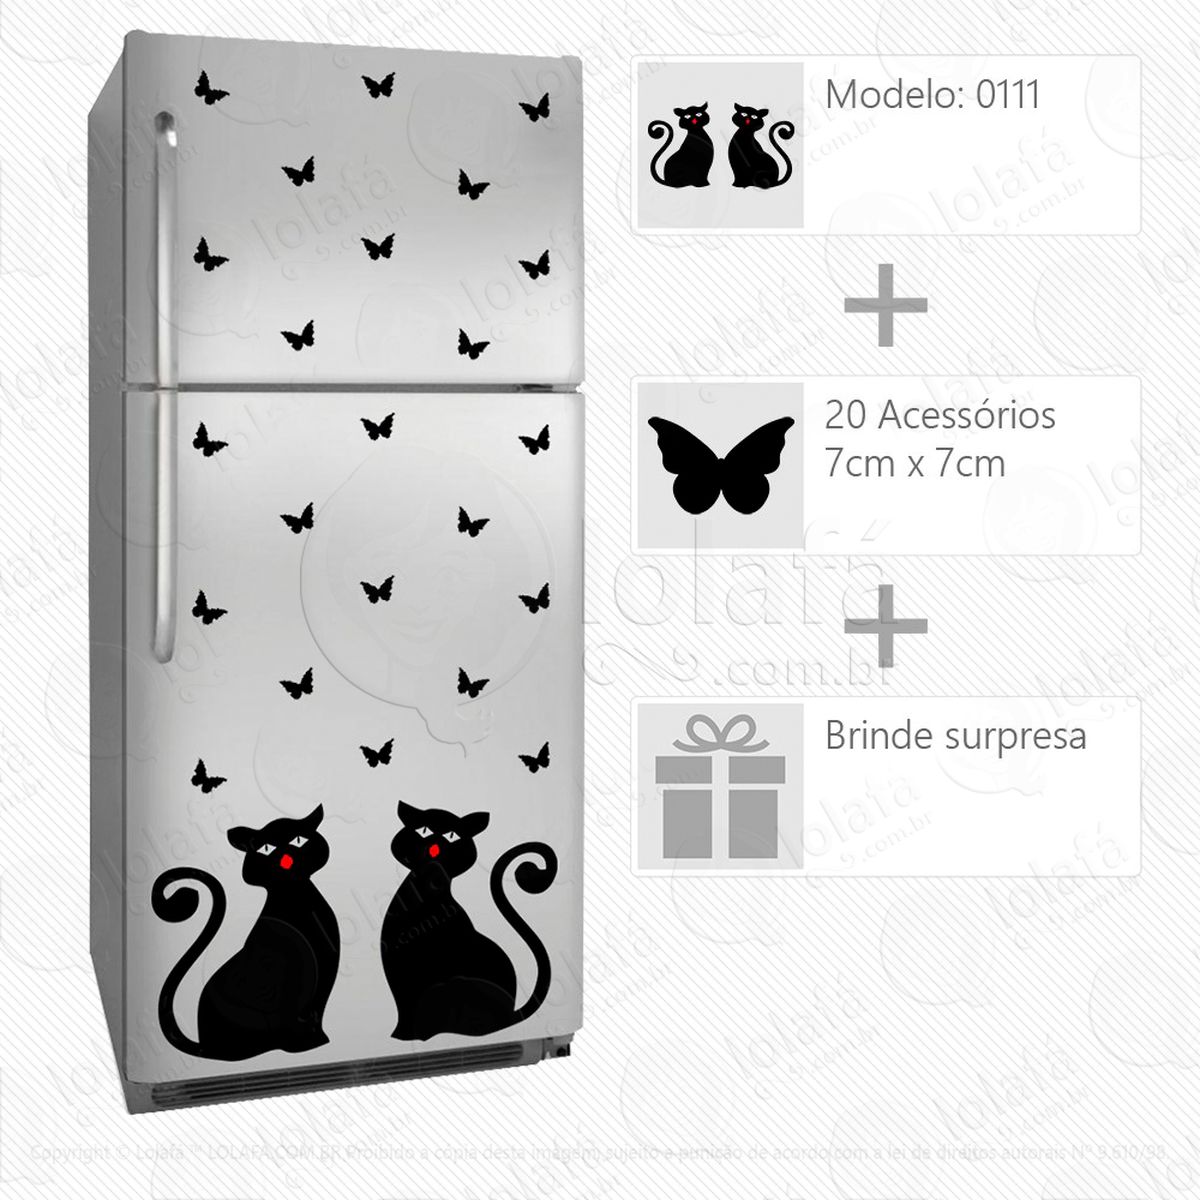 gatos adesivo para geladeira e frigobar - mod:111